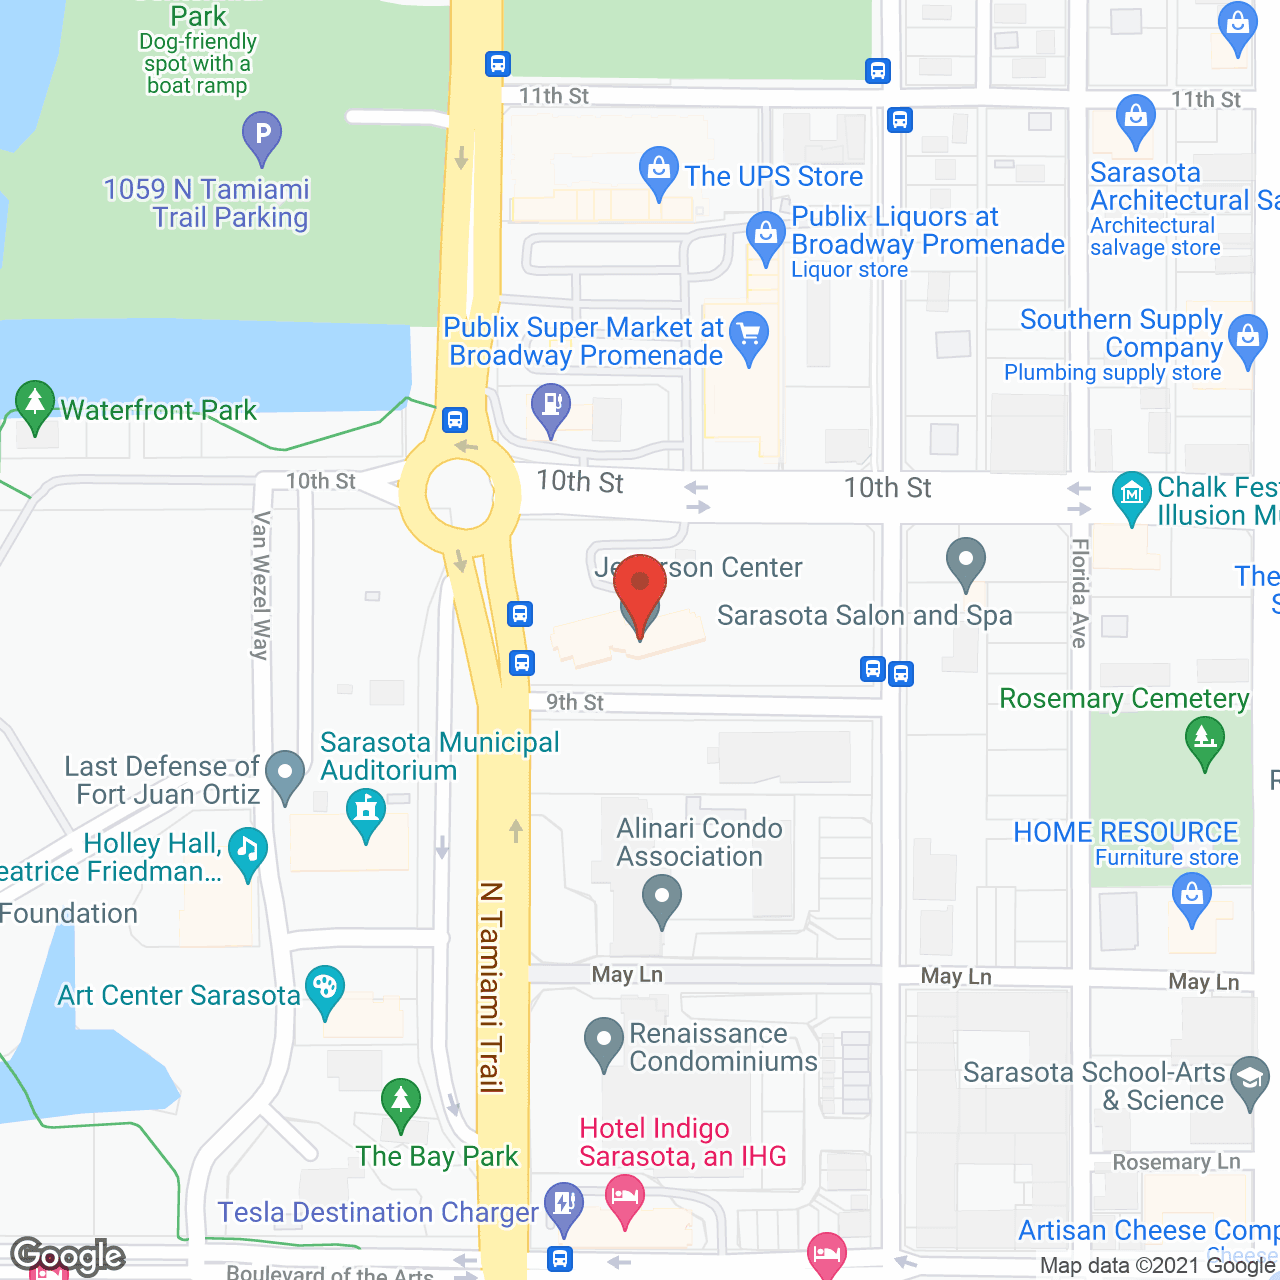 Jefferson Center in google map